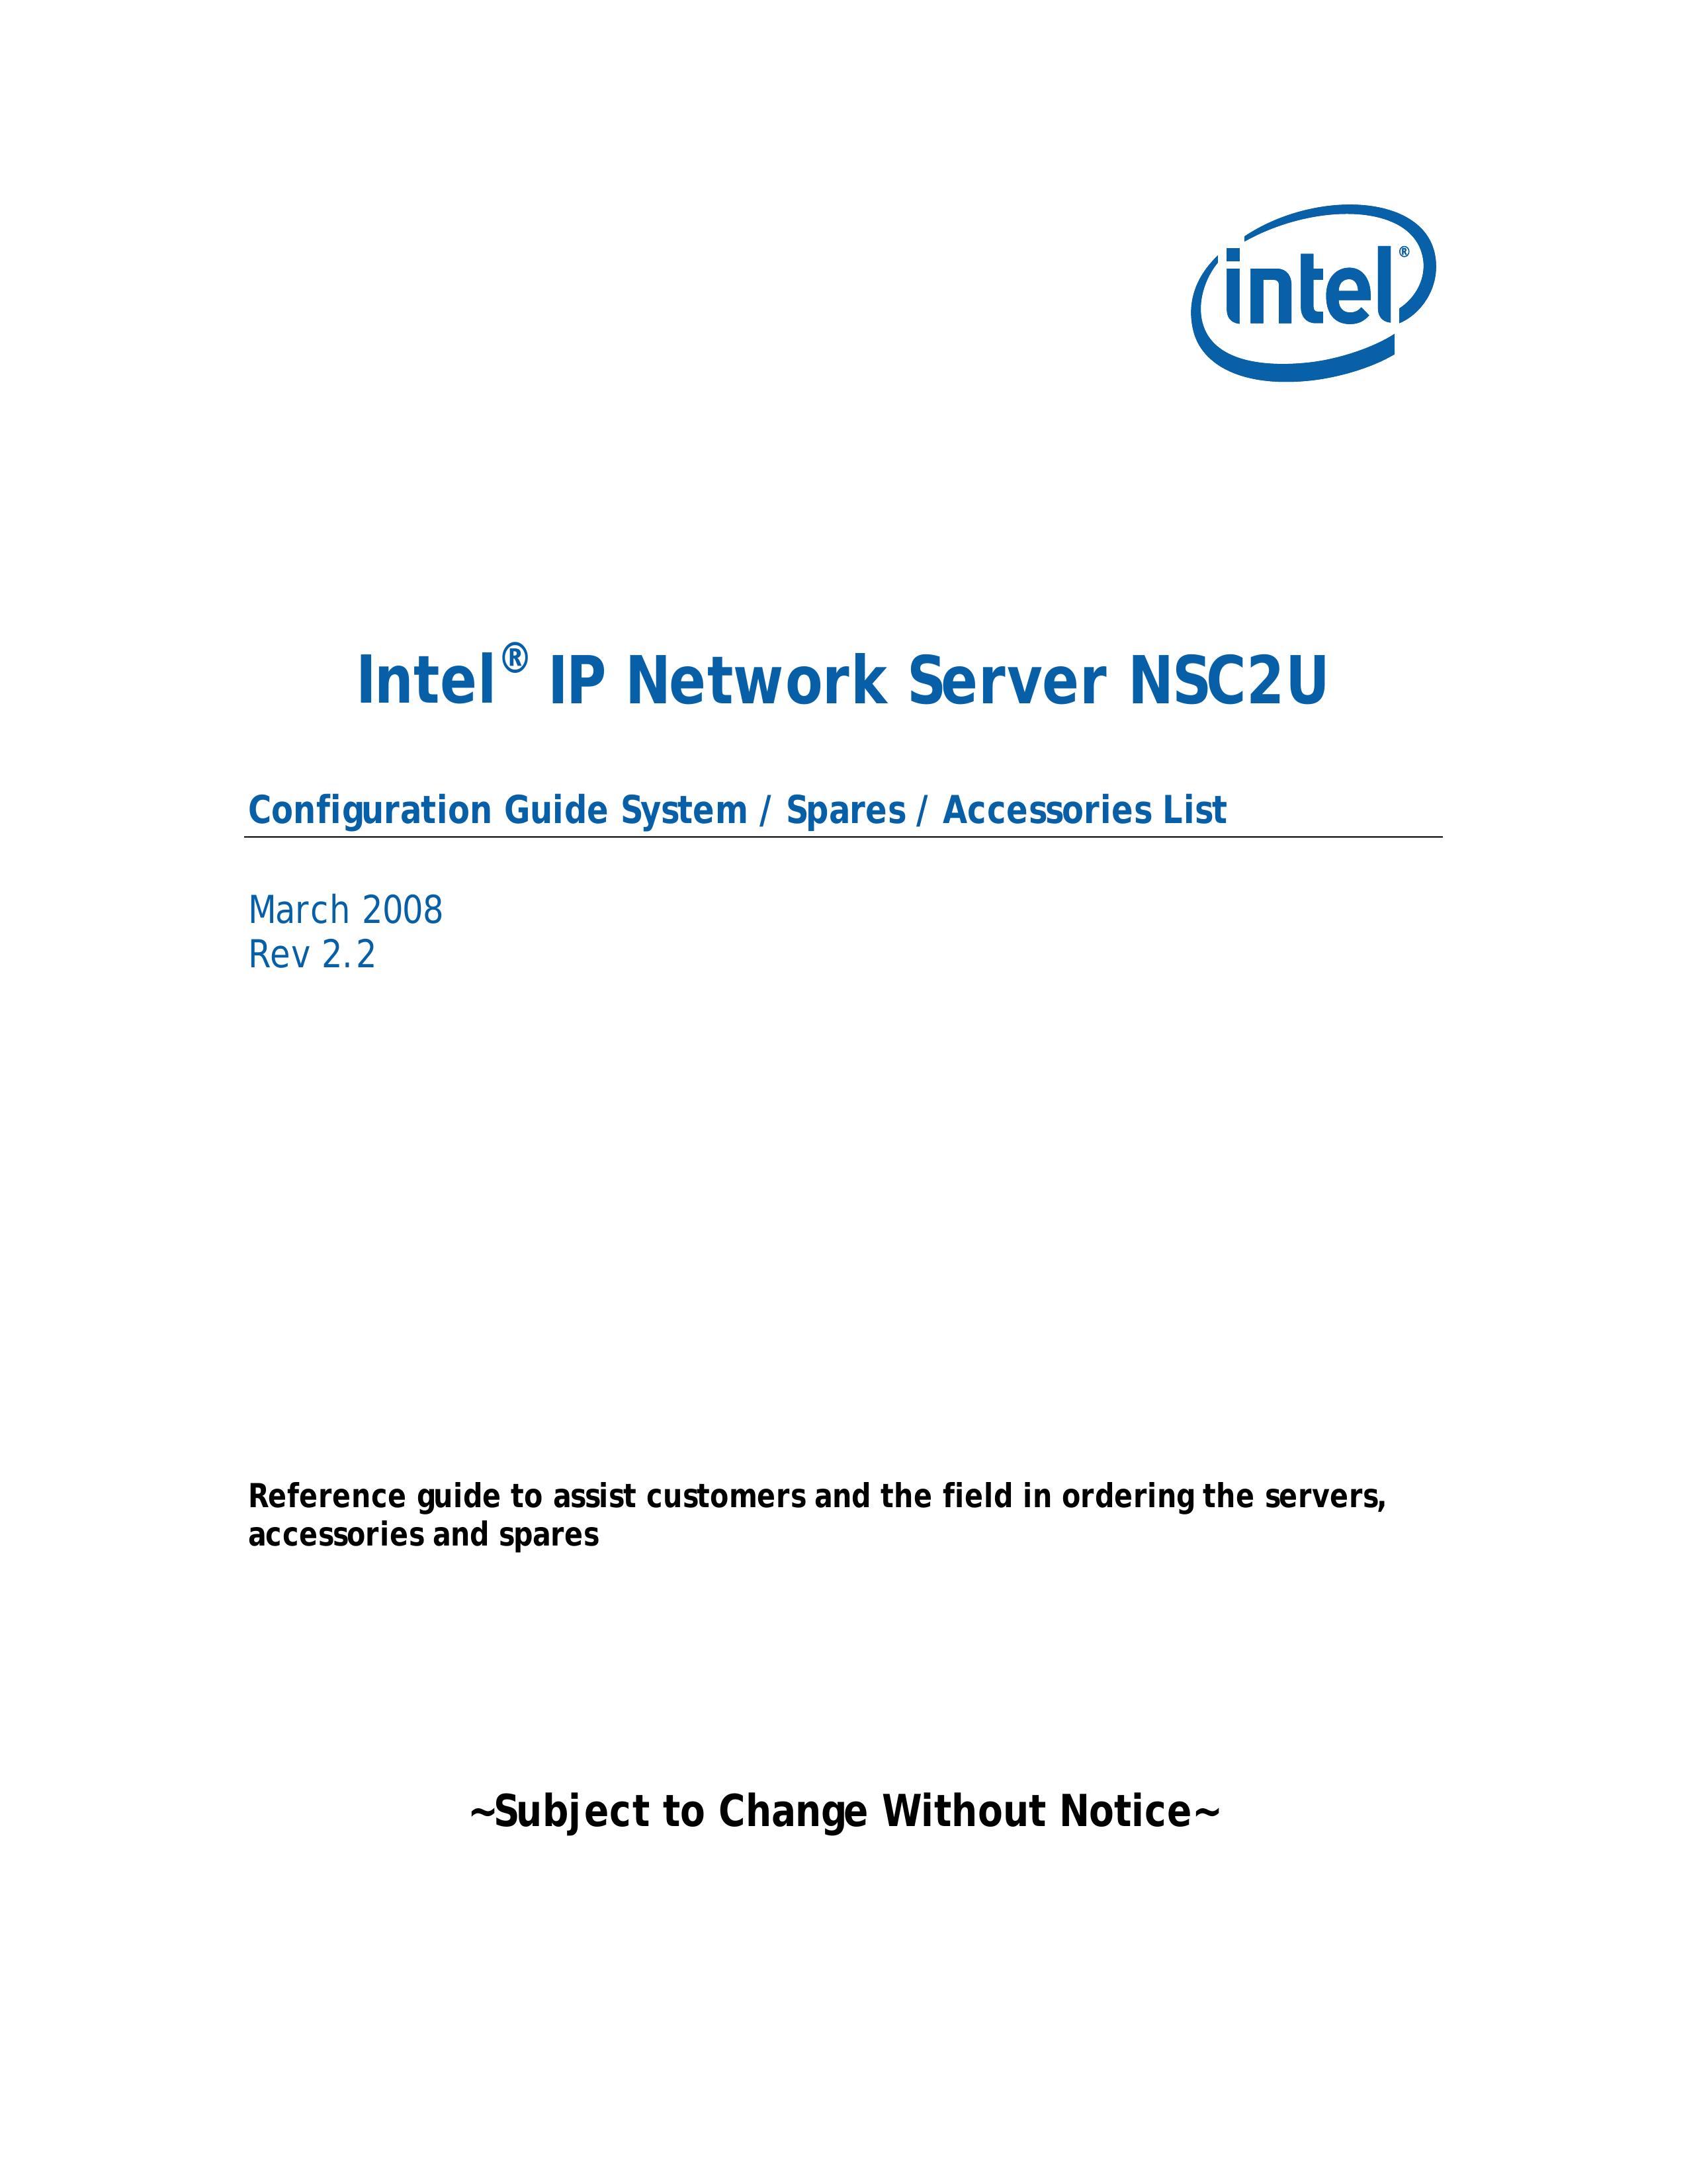 Intel NSC2U Security Camera User Manual